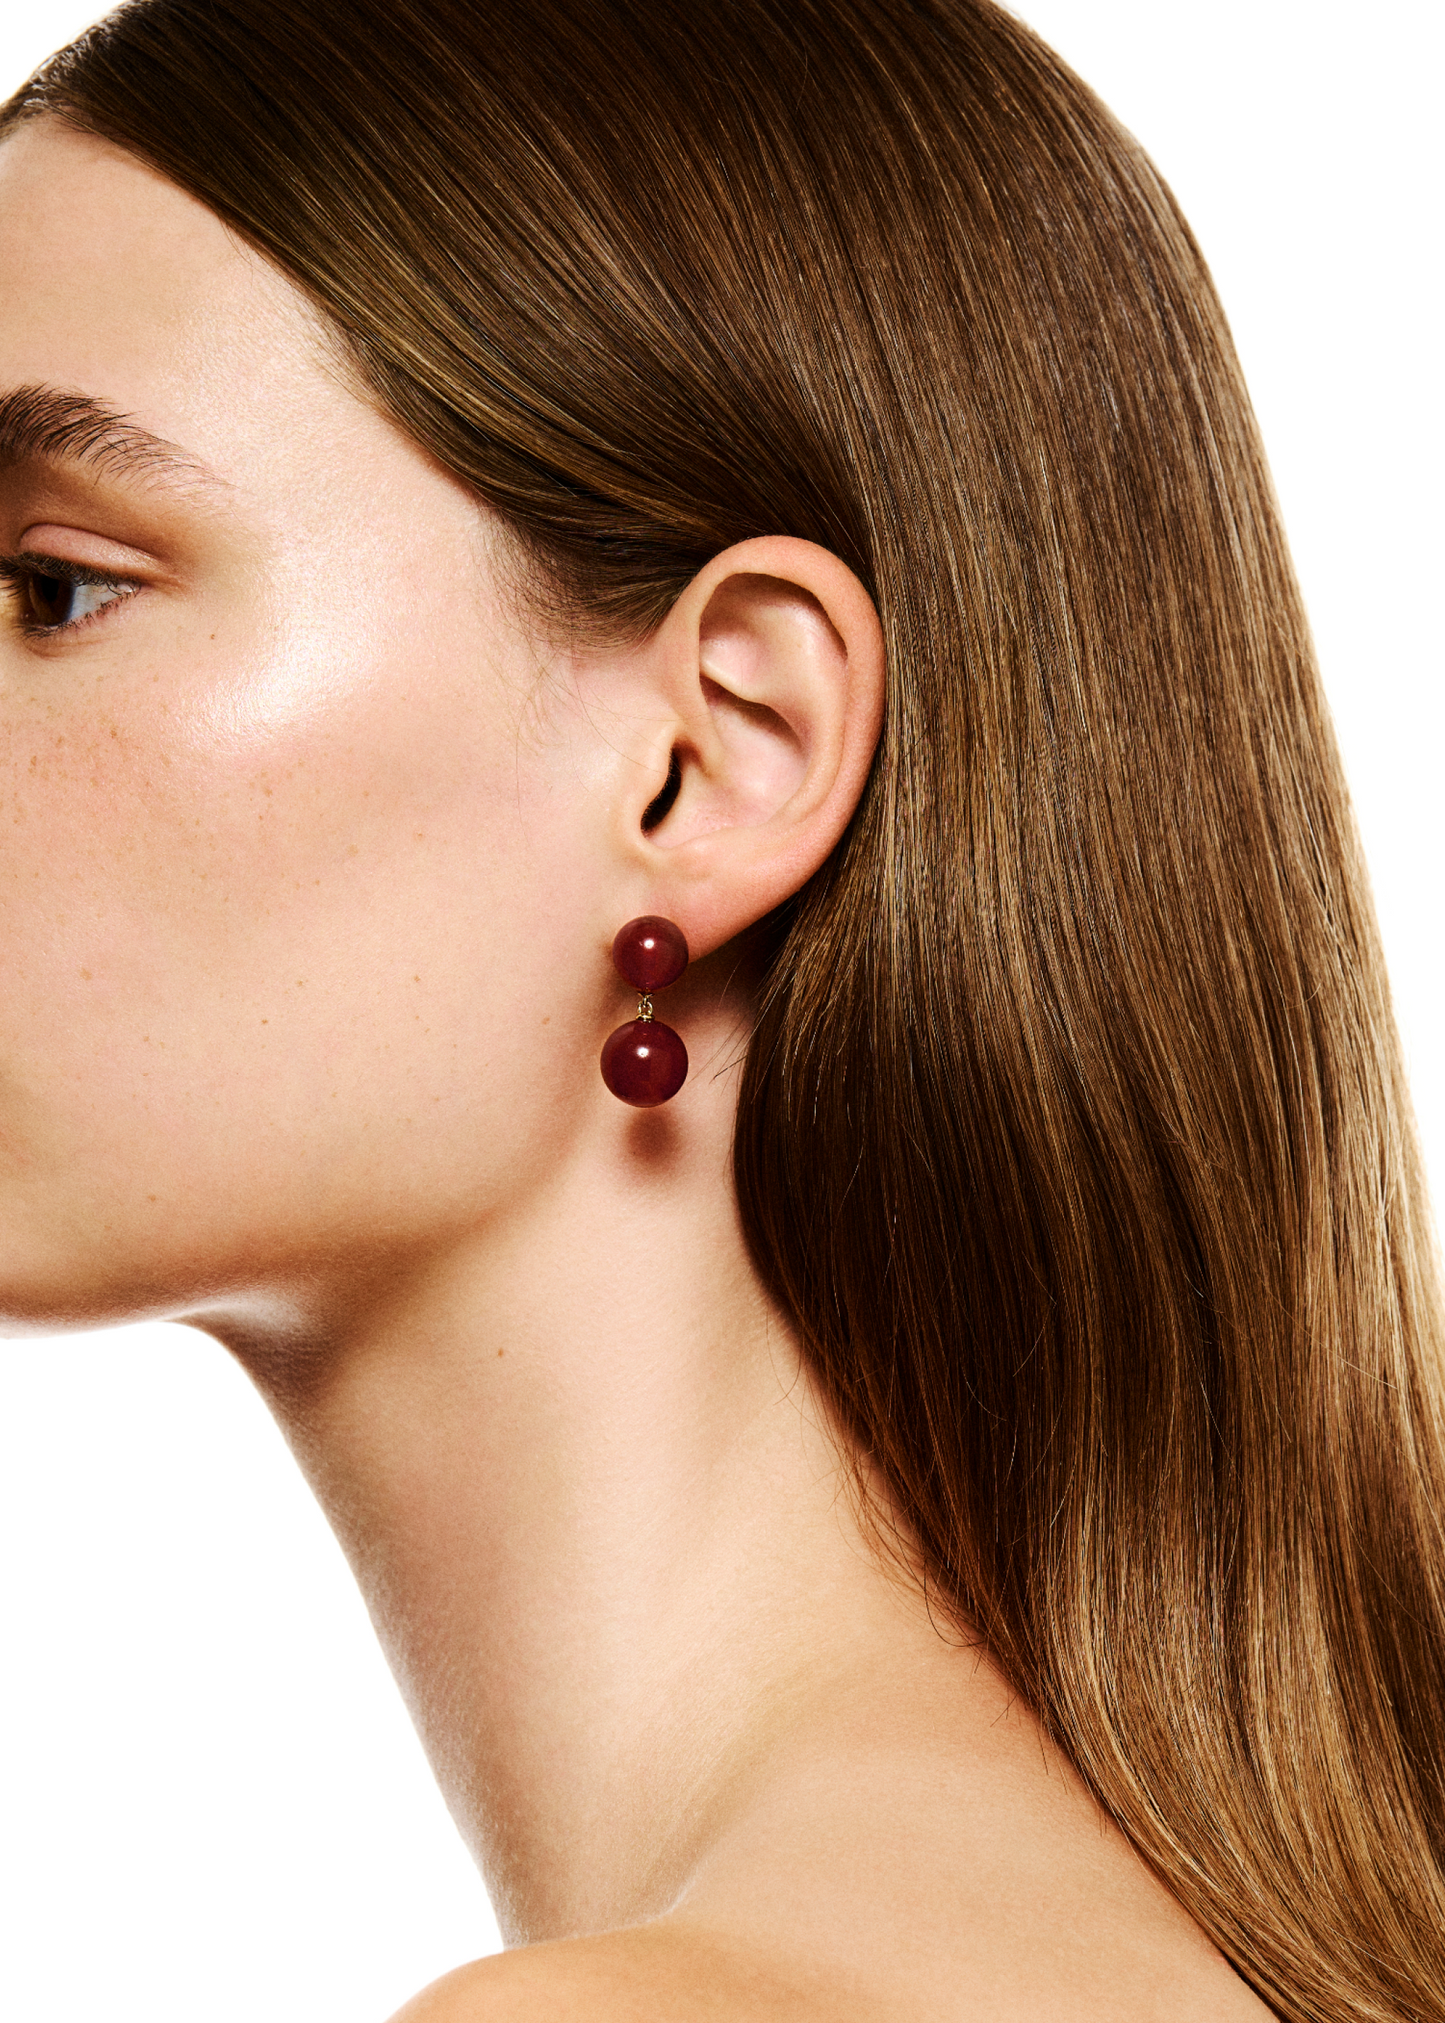 The Hannah Earrings